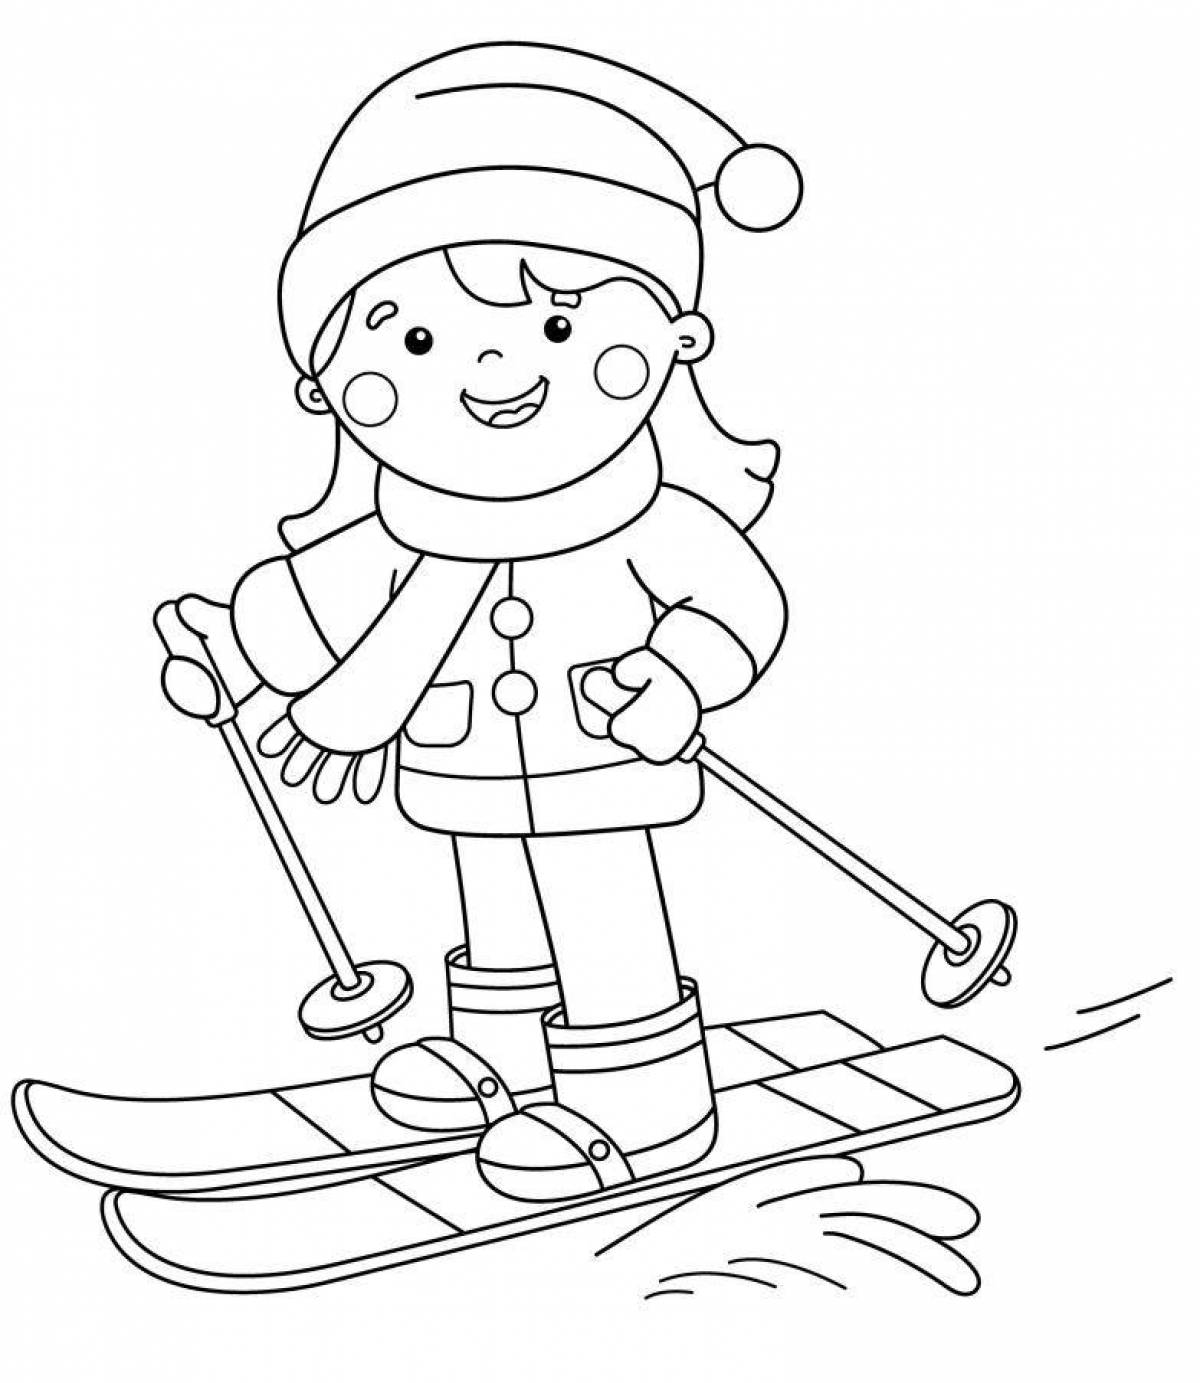 Children's winter sports coloring book